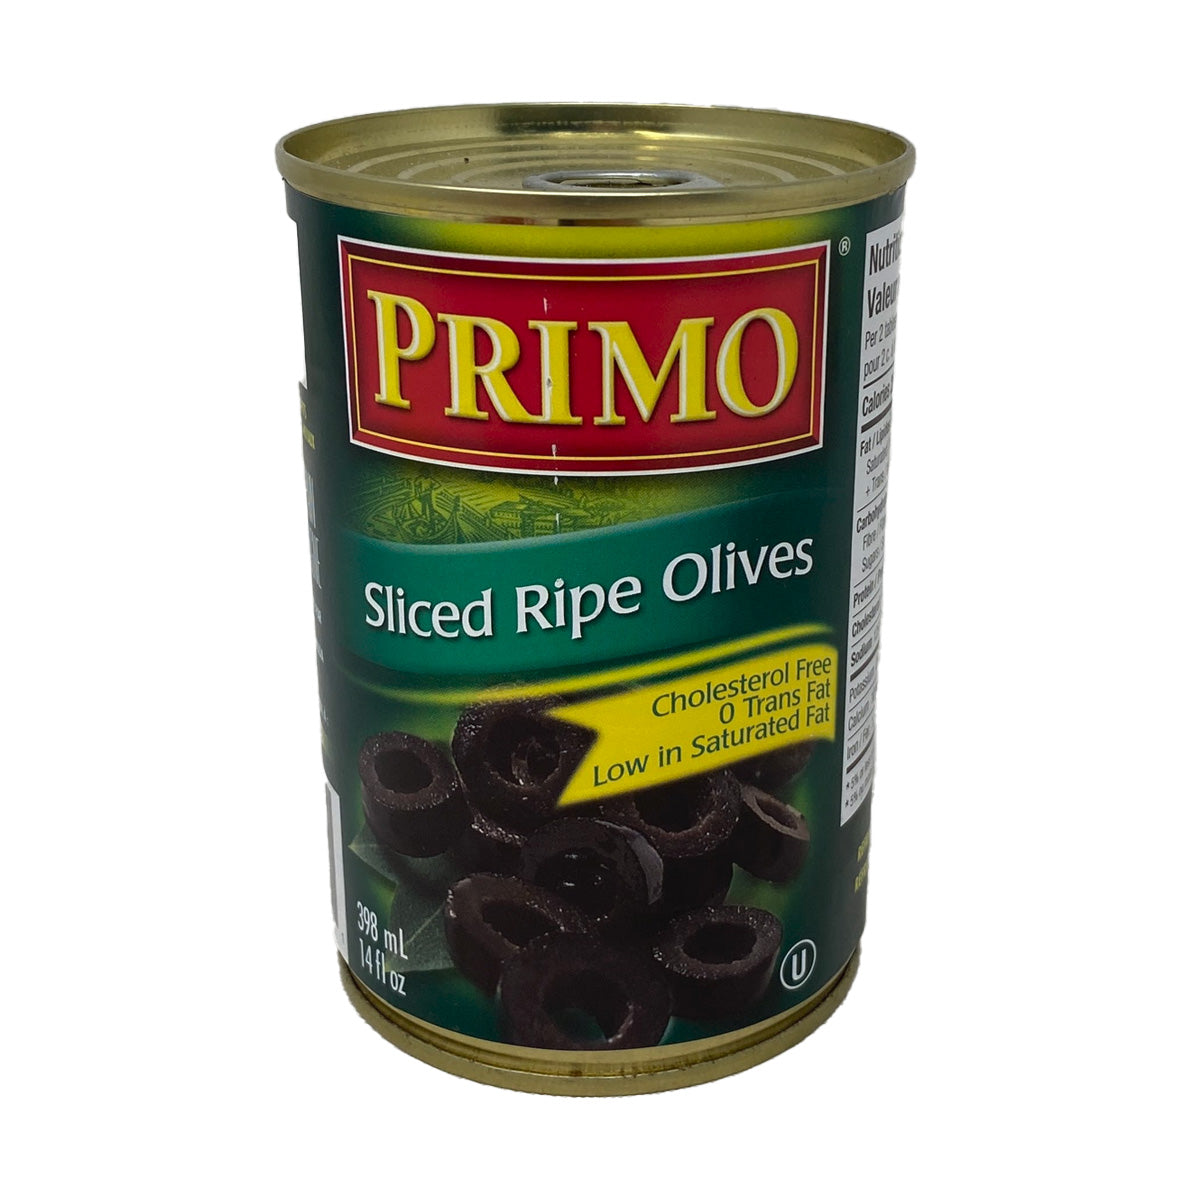 Primo Sliced Ripe Olives